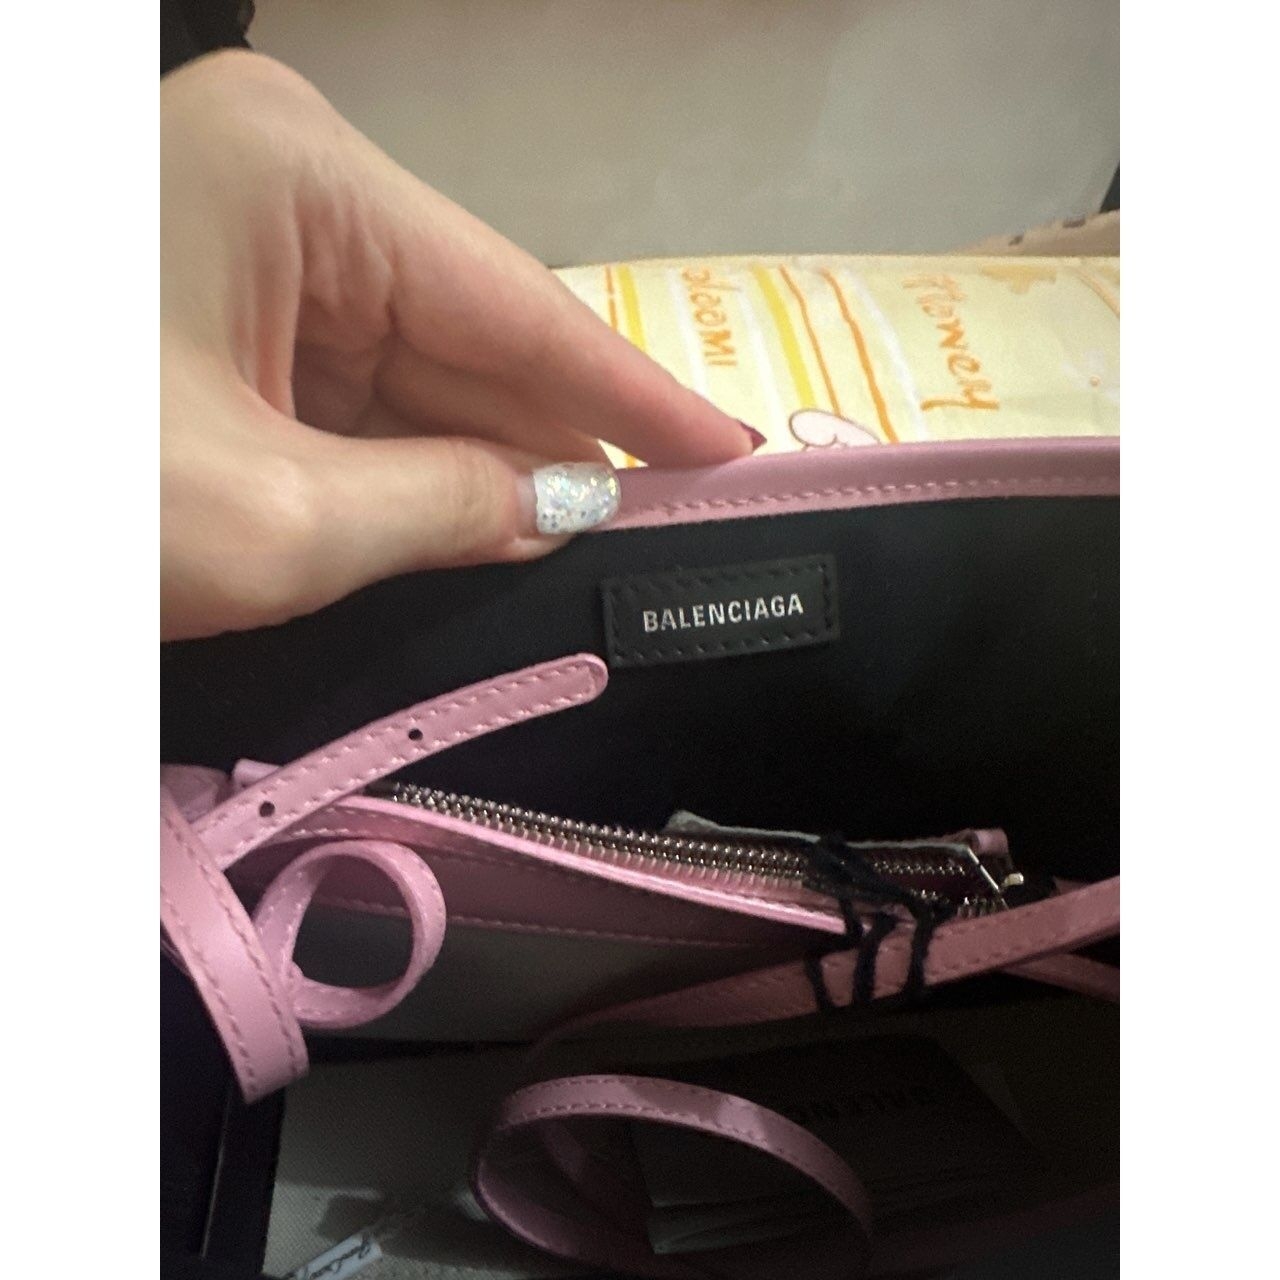 Balenciaga Cabas XS Pink Canvas Tote Bag